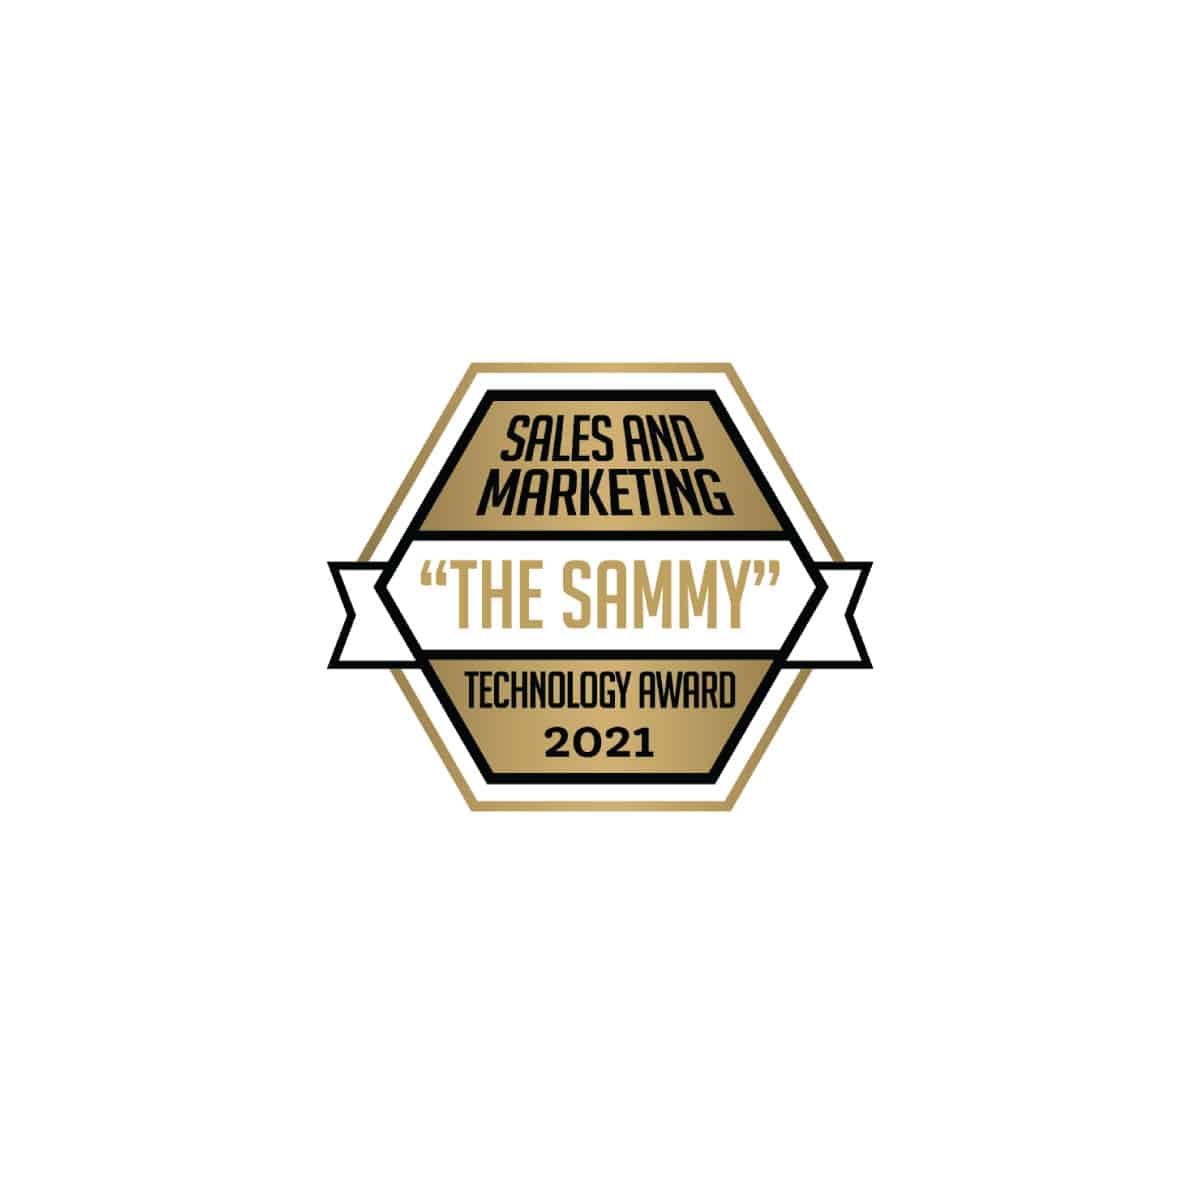 Sales and Marketing Technology Award 2021 badge